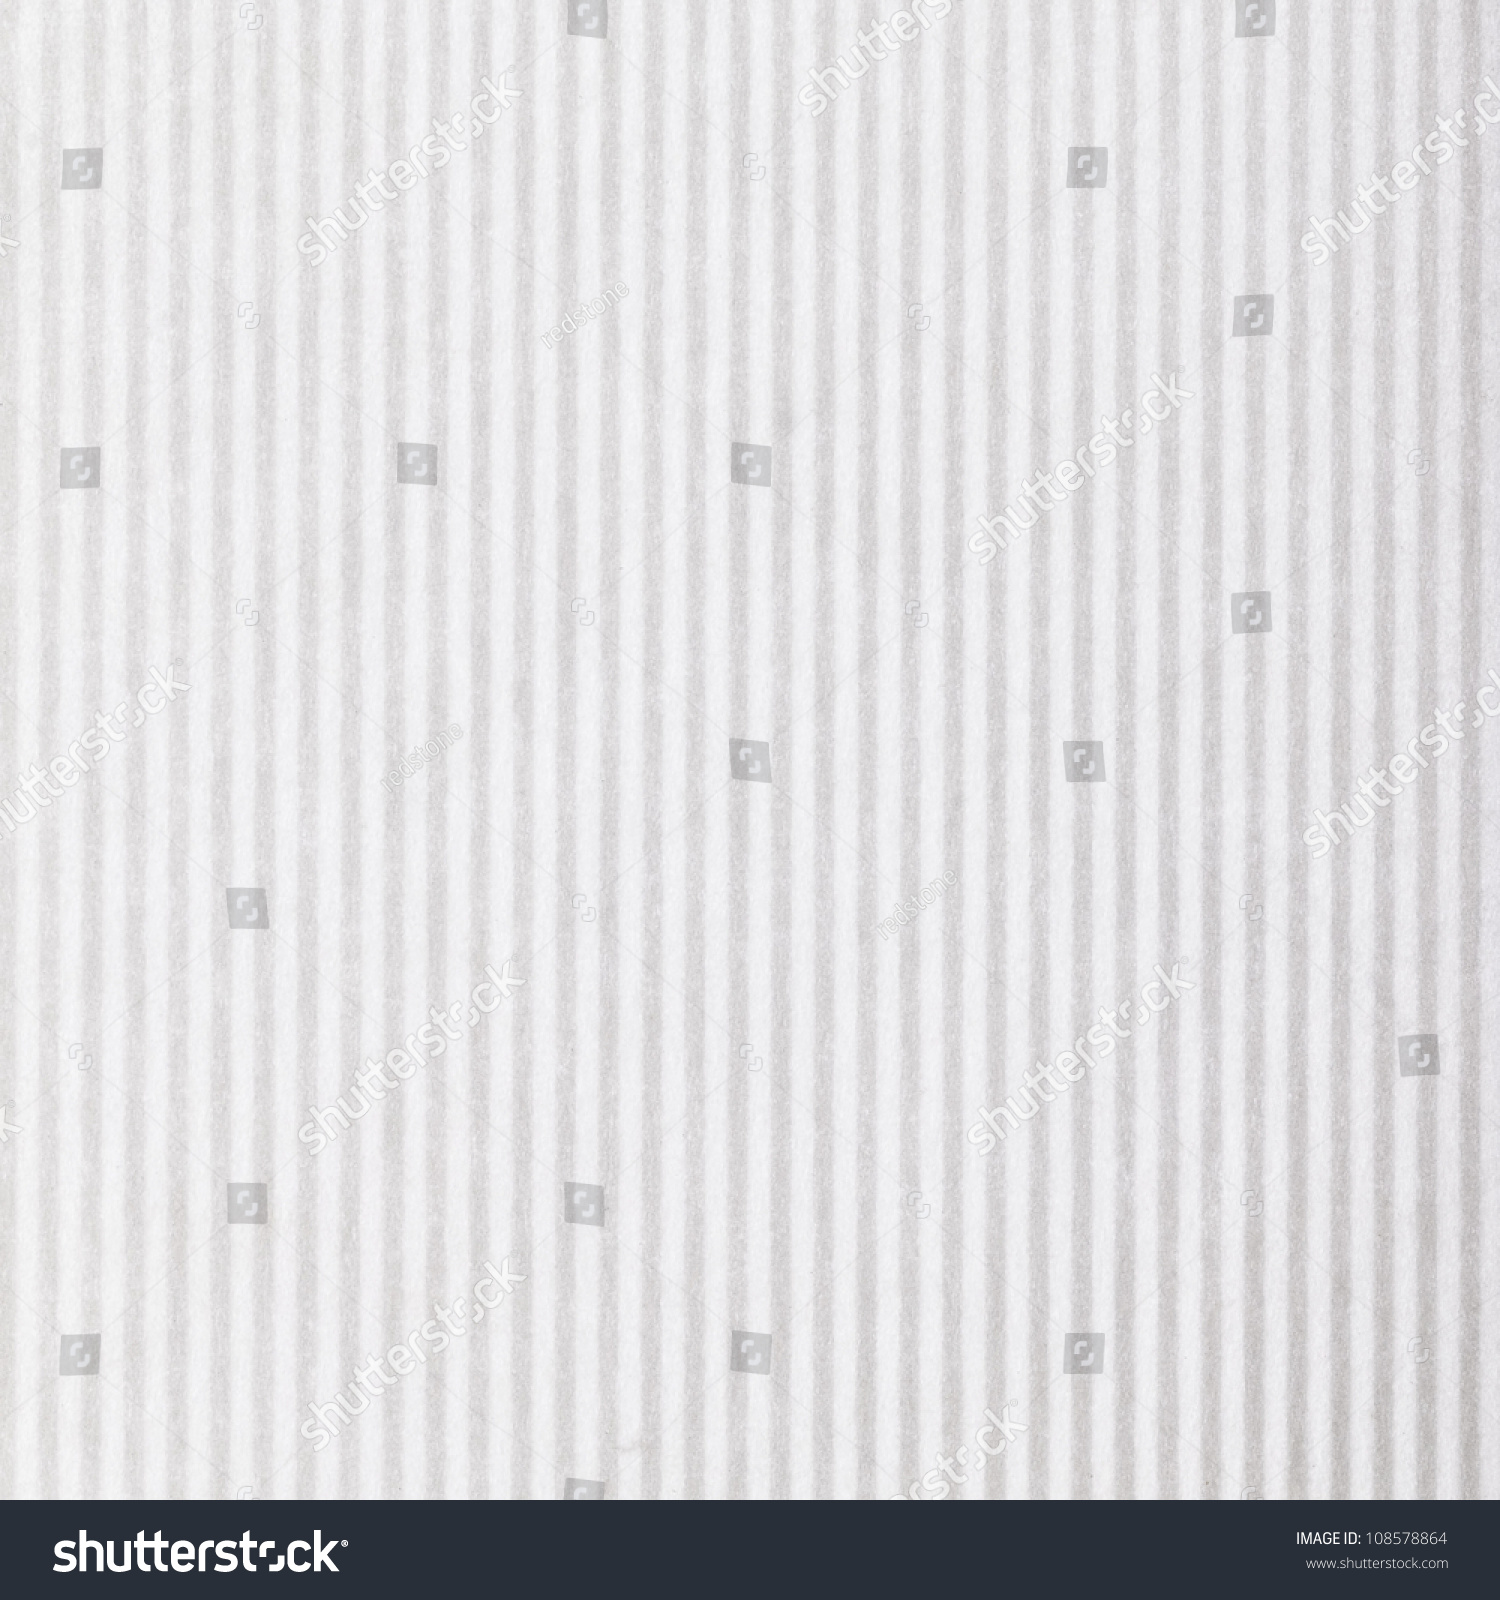 Art Paper Textured Background - smooth, vertical bar,light colour #108578864